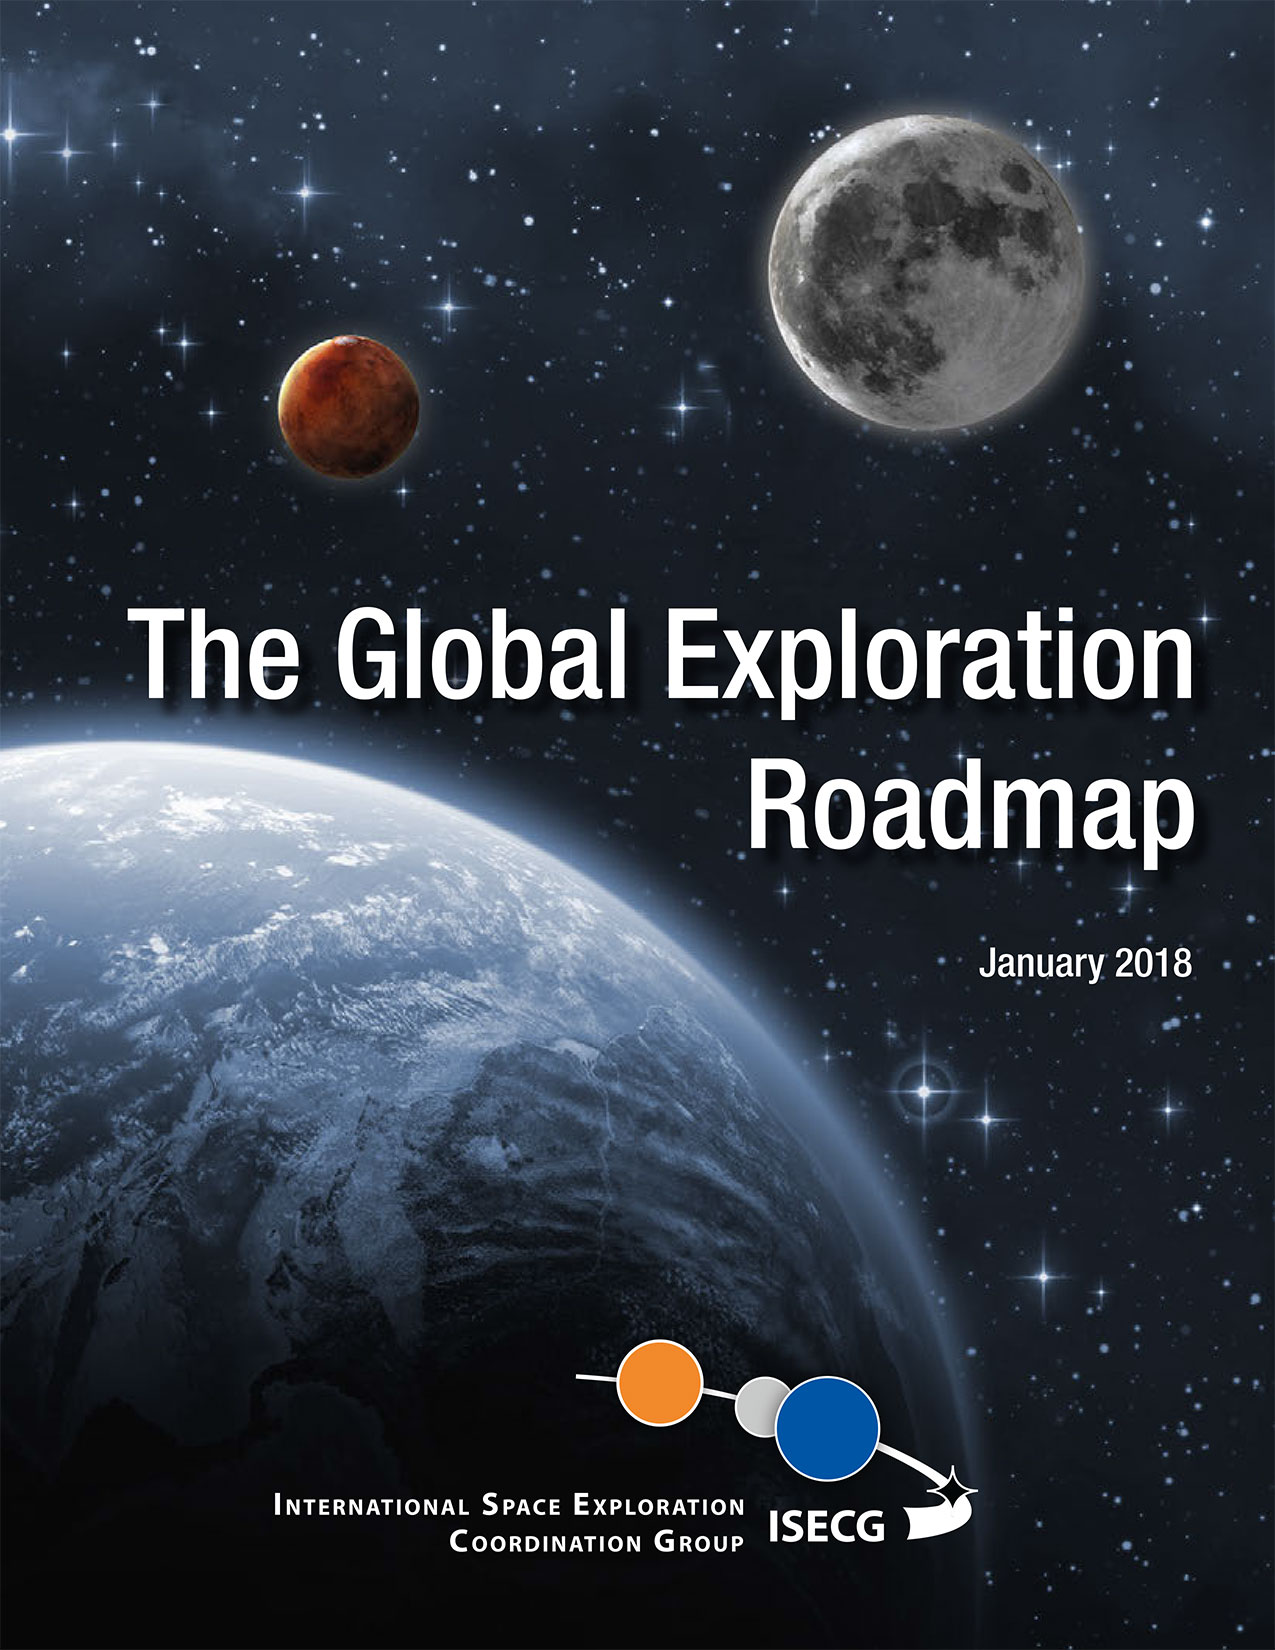 International Space Exploration Coordination Group